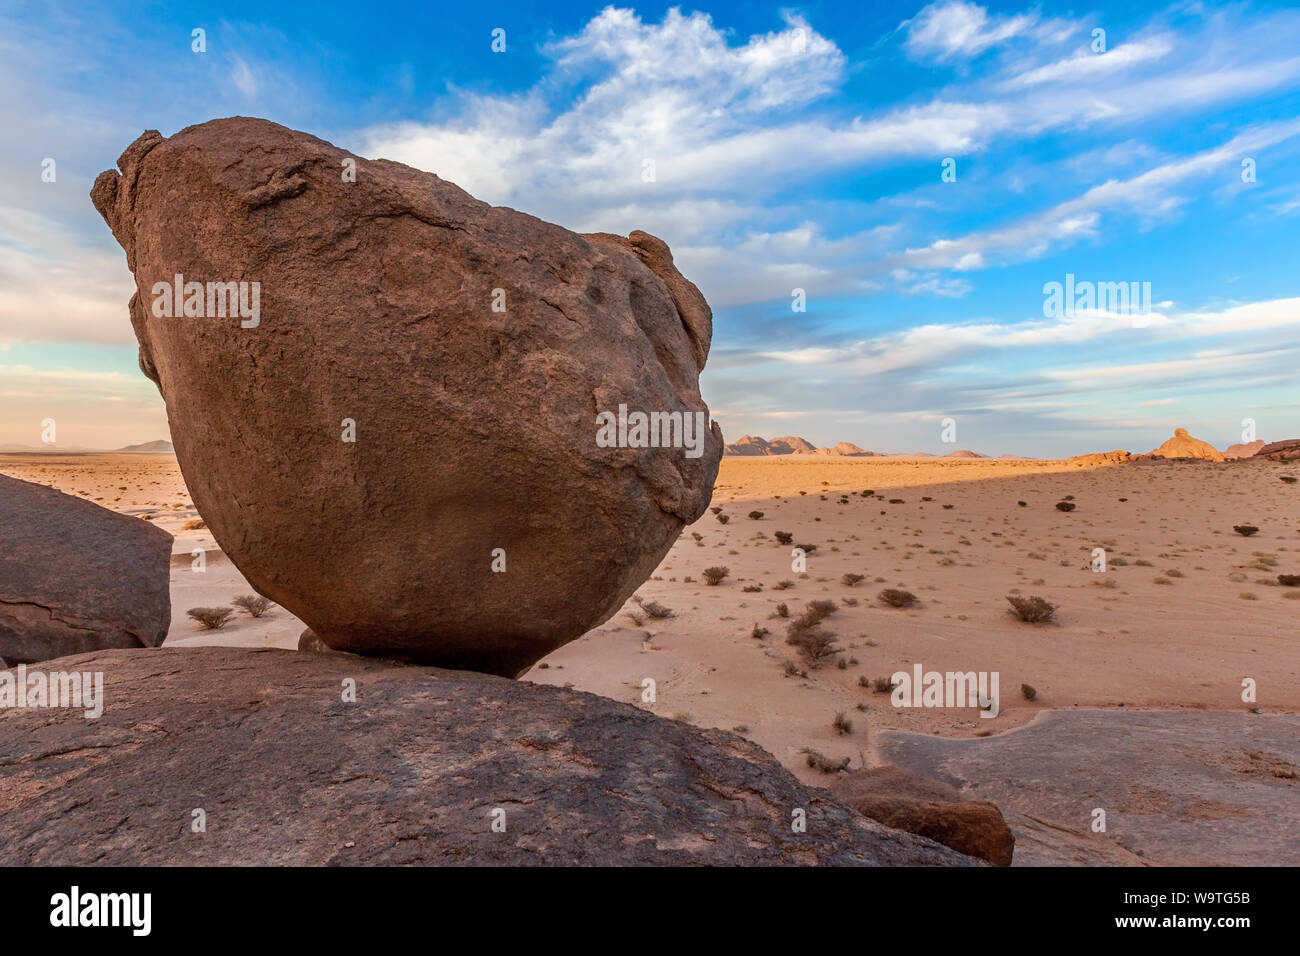 Boulders in the desert, Riyadh, Saudi Arabia Stock Photo